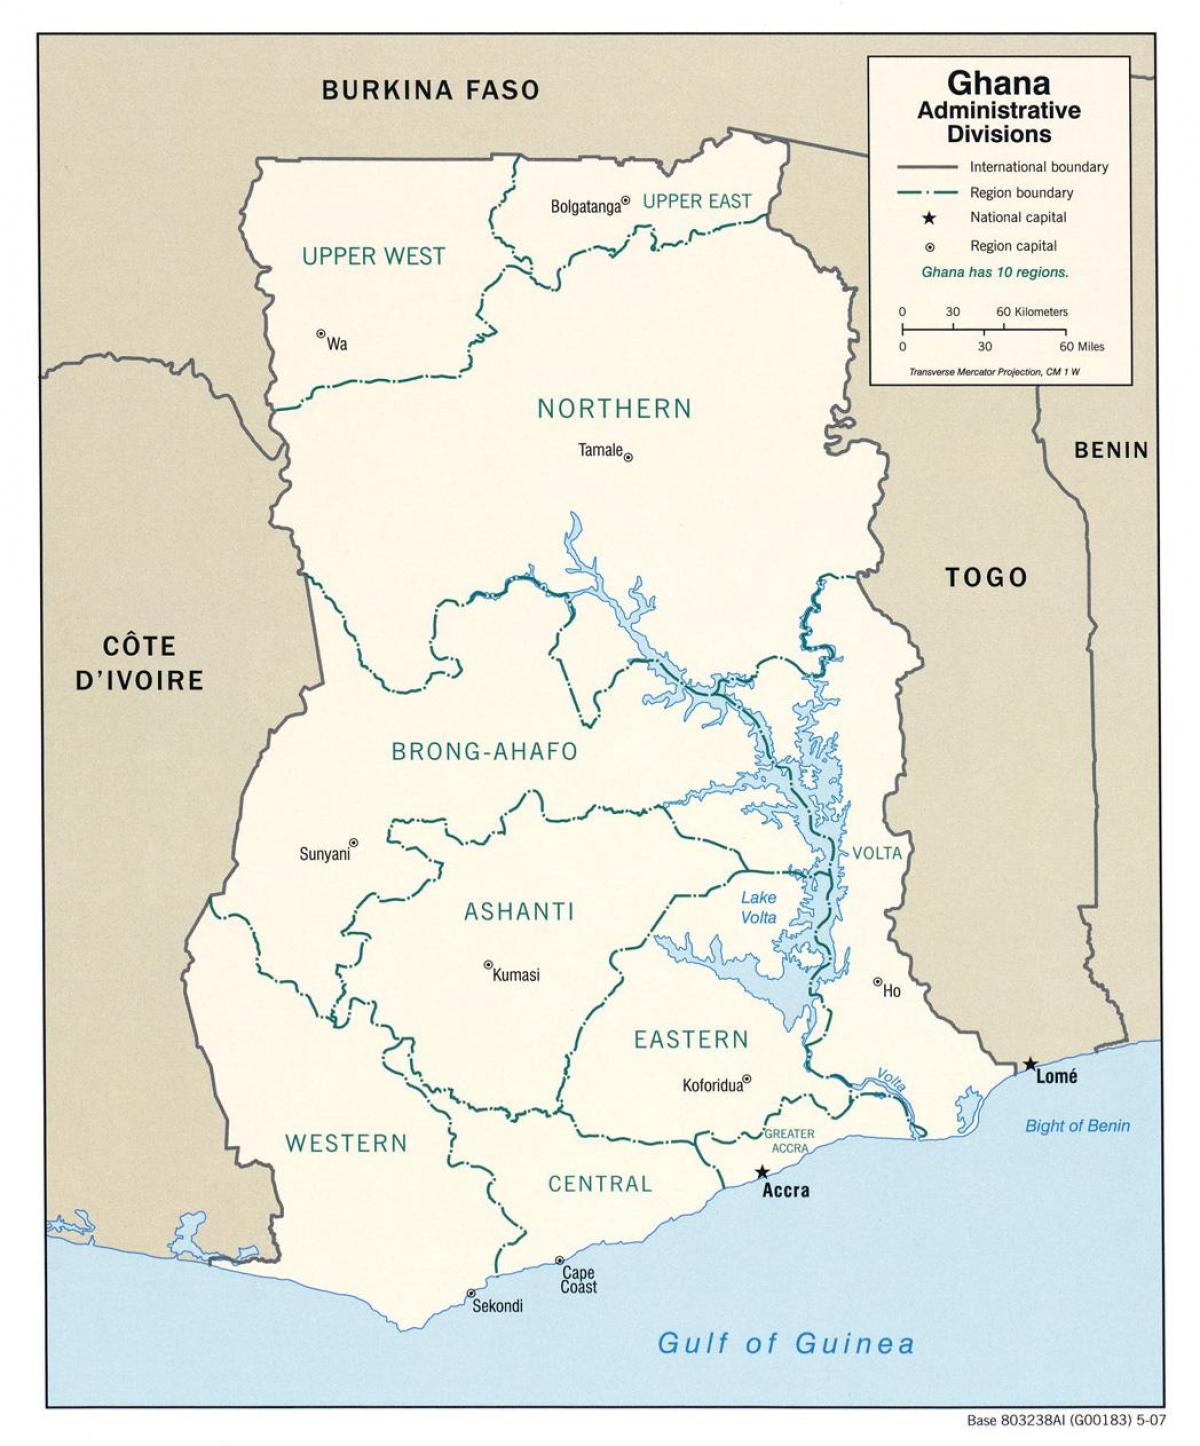 ghana kort med regioner og distrikter